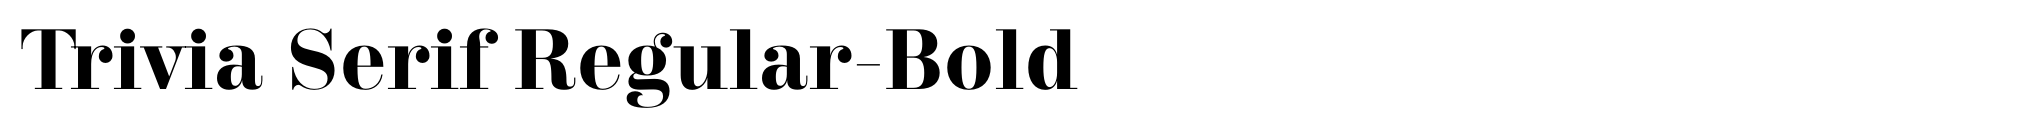 Trivia Serif Regular-Bold image